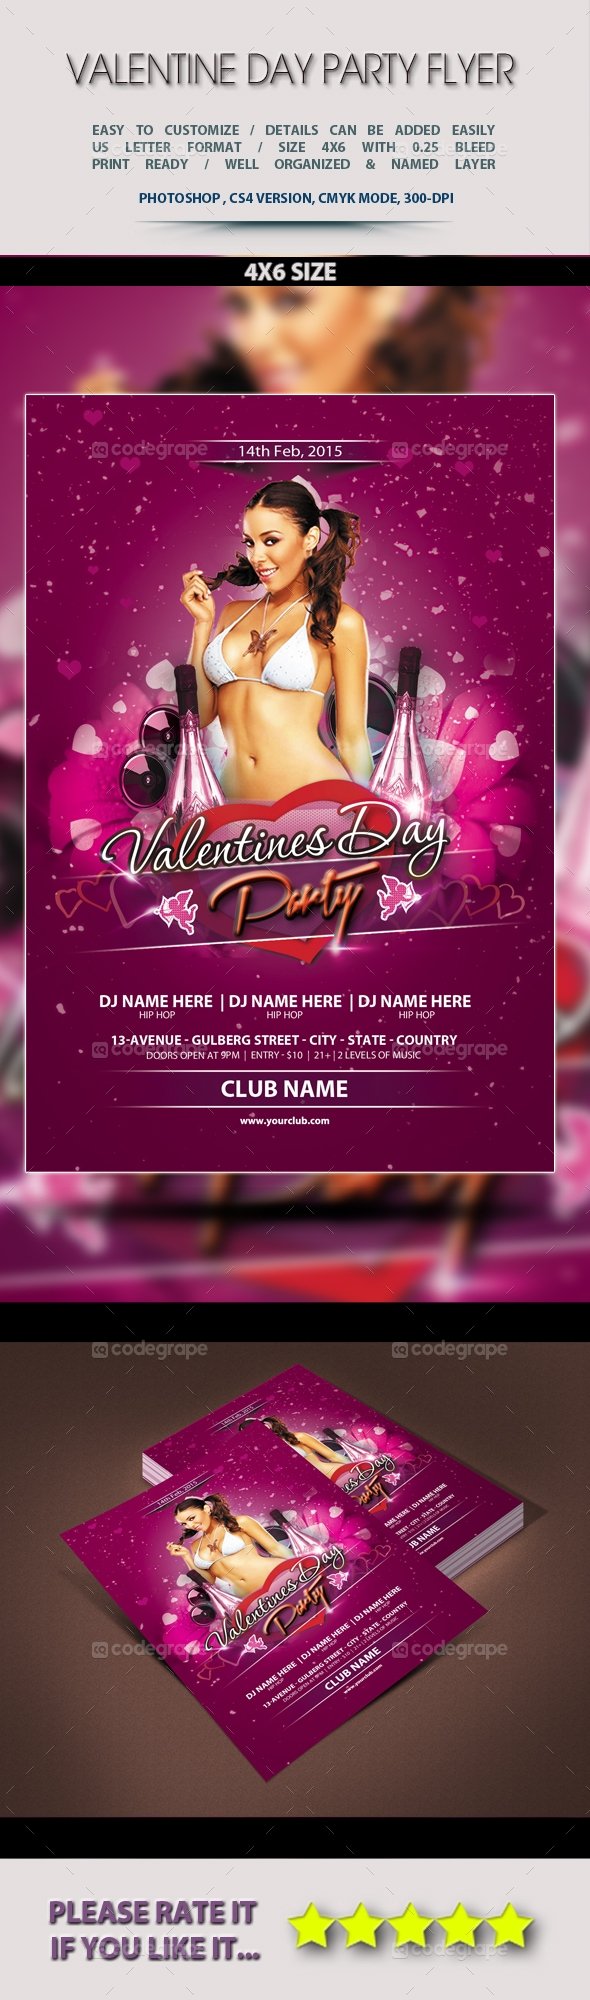 codegrape-5238-valentine-day-party-flyer1.jpg